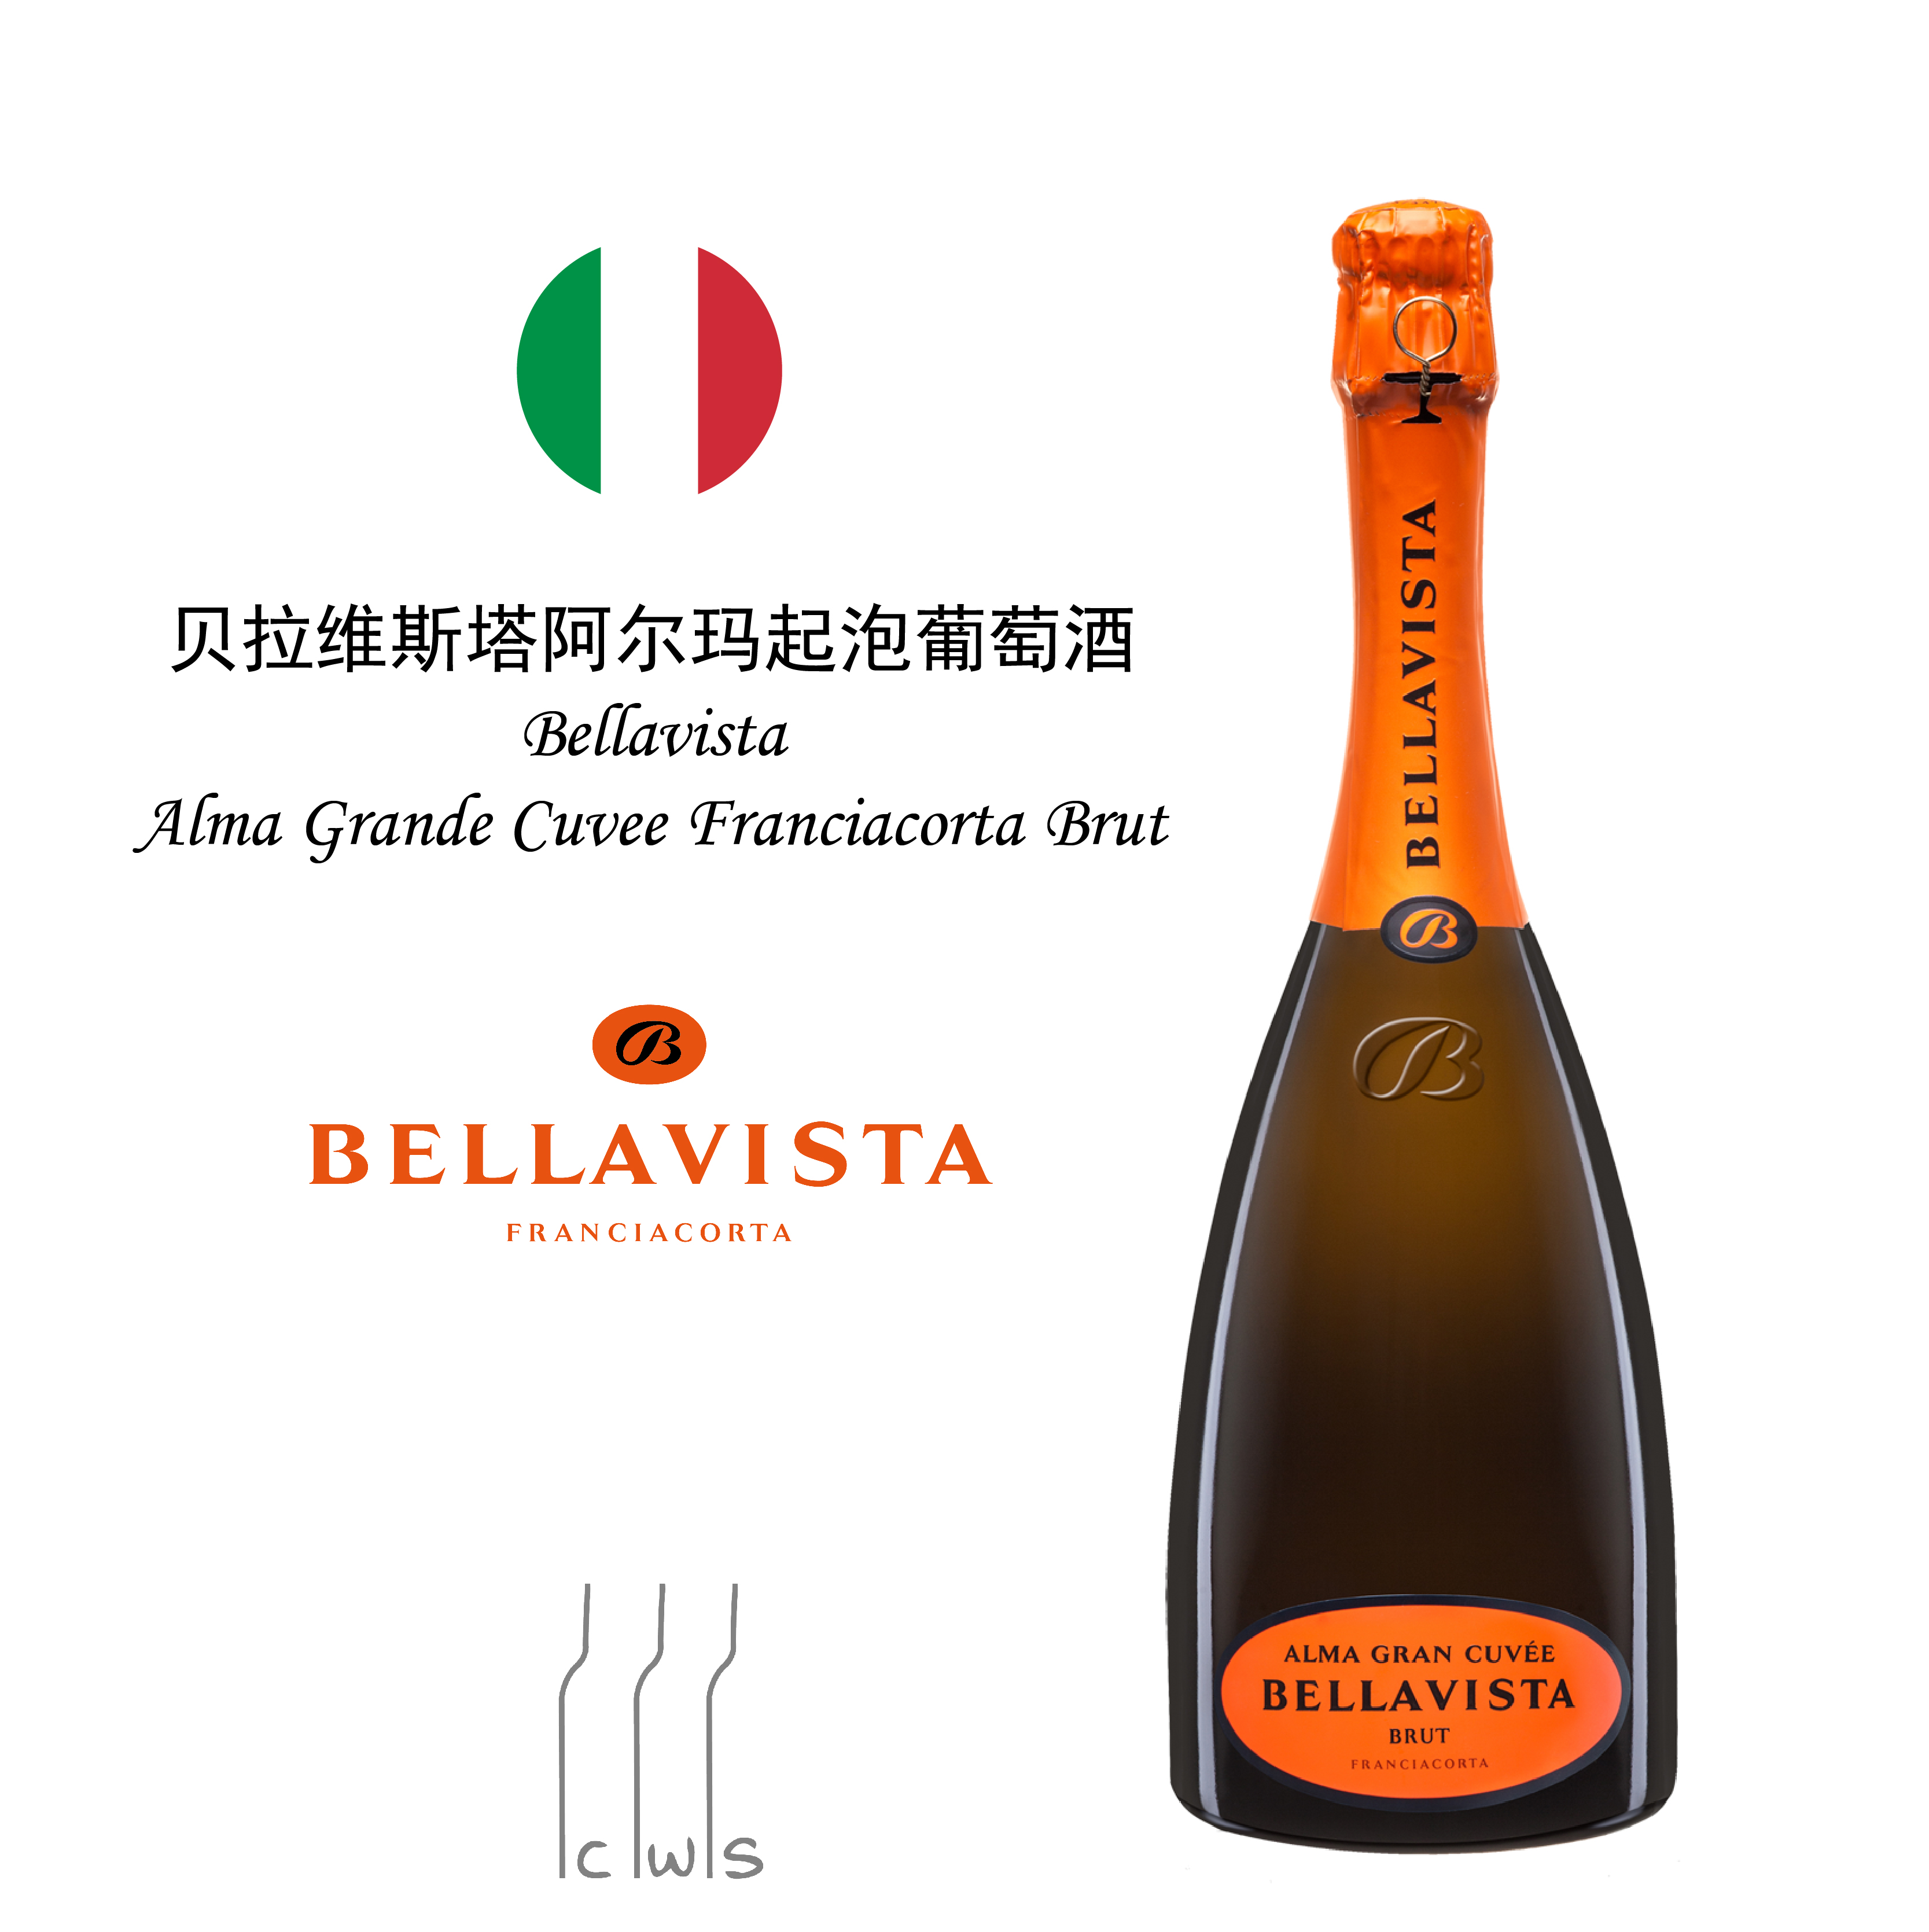 Bellavista Alma Grande Cuvee Franciacorta Brut 贝拉维斯塔阿尔玛起泡葡萄酒，意大利